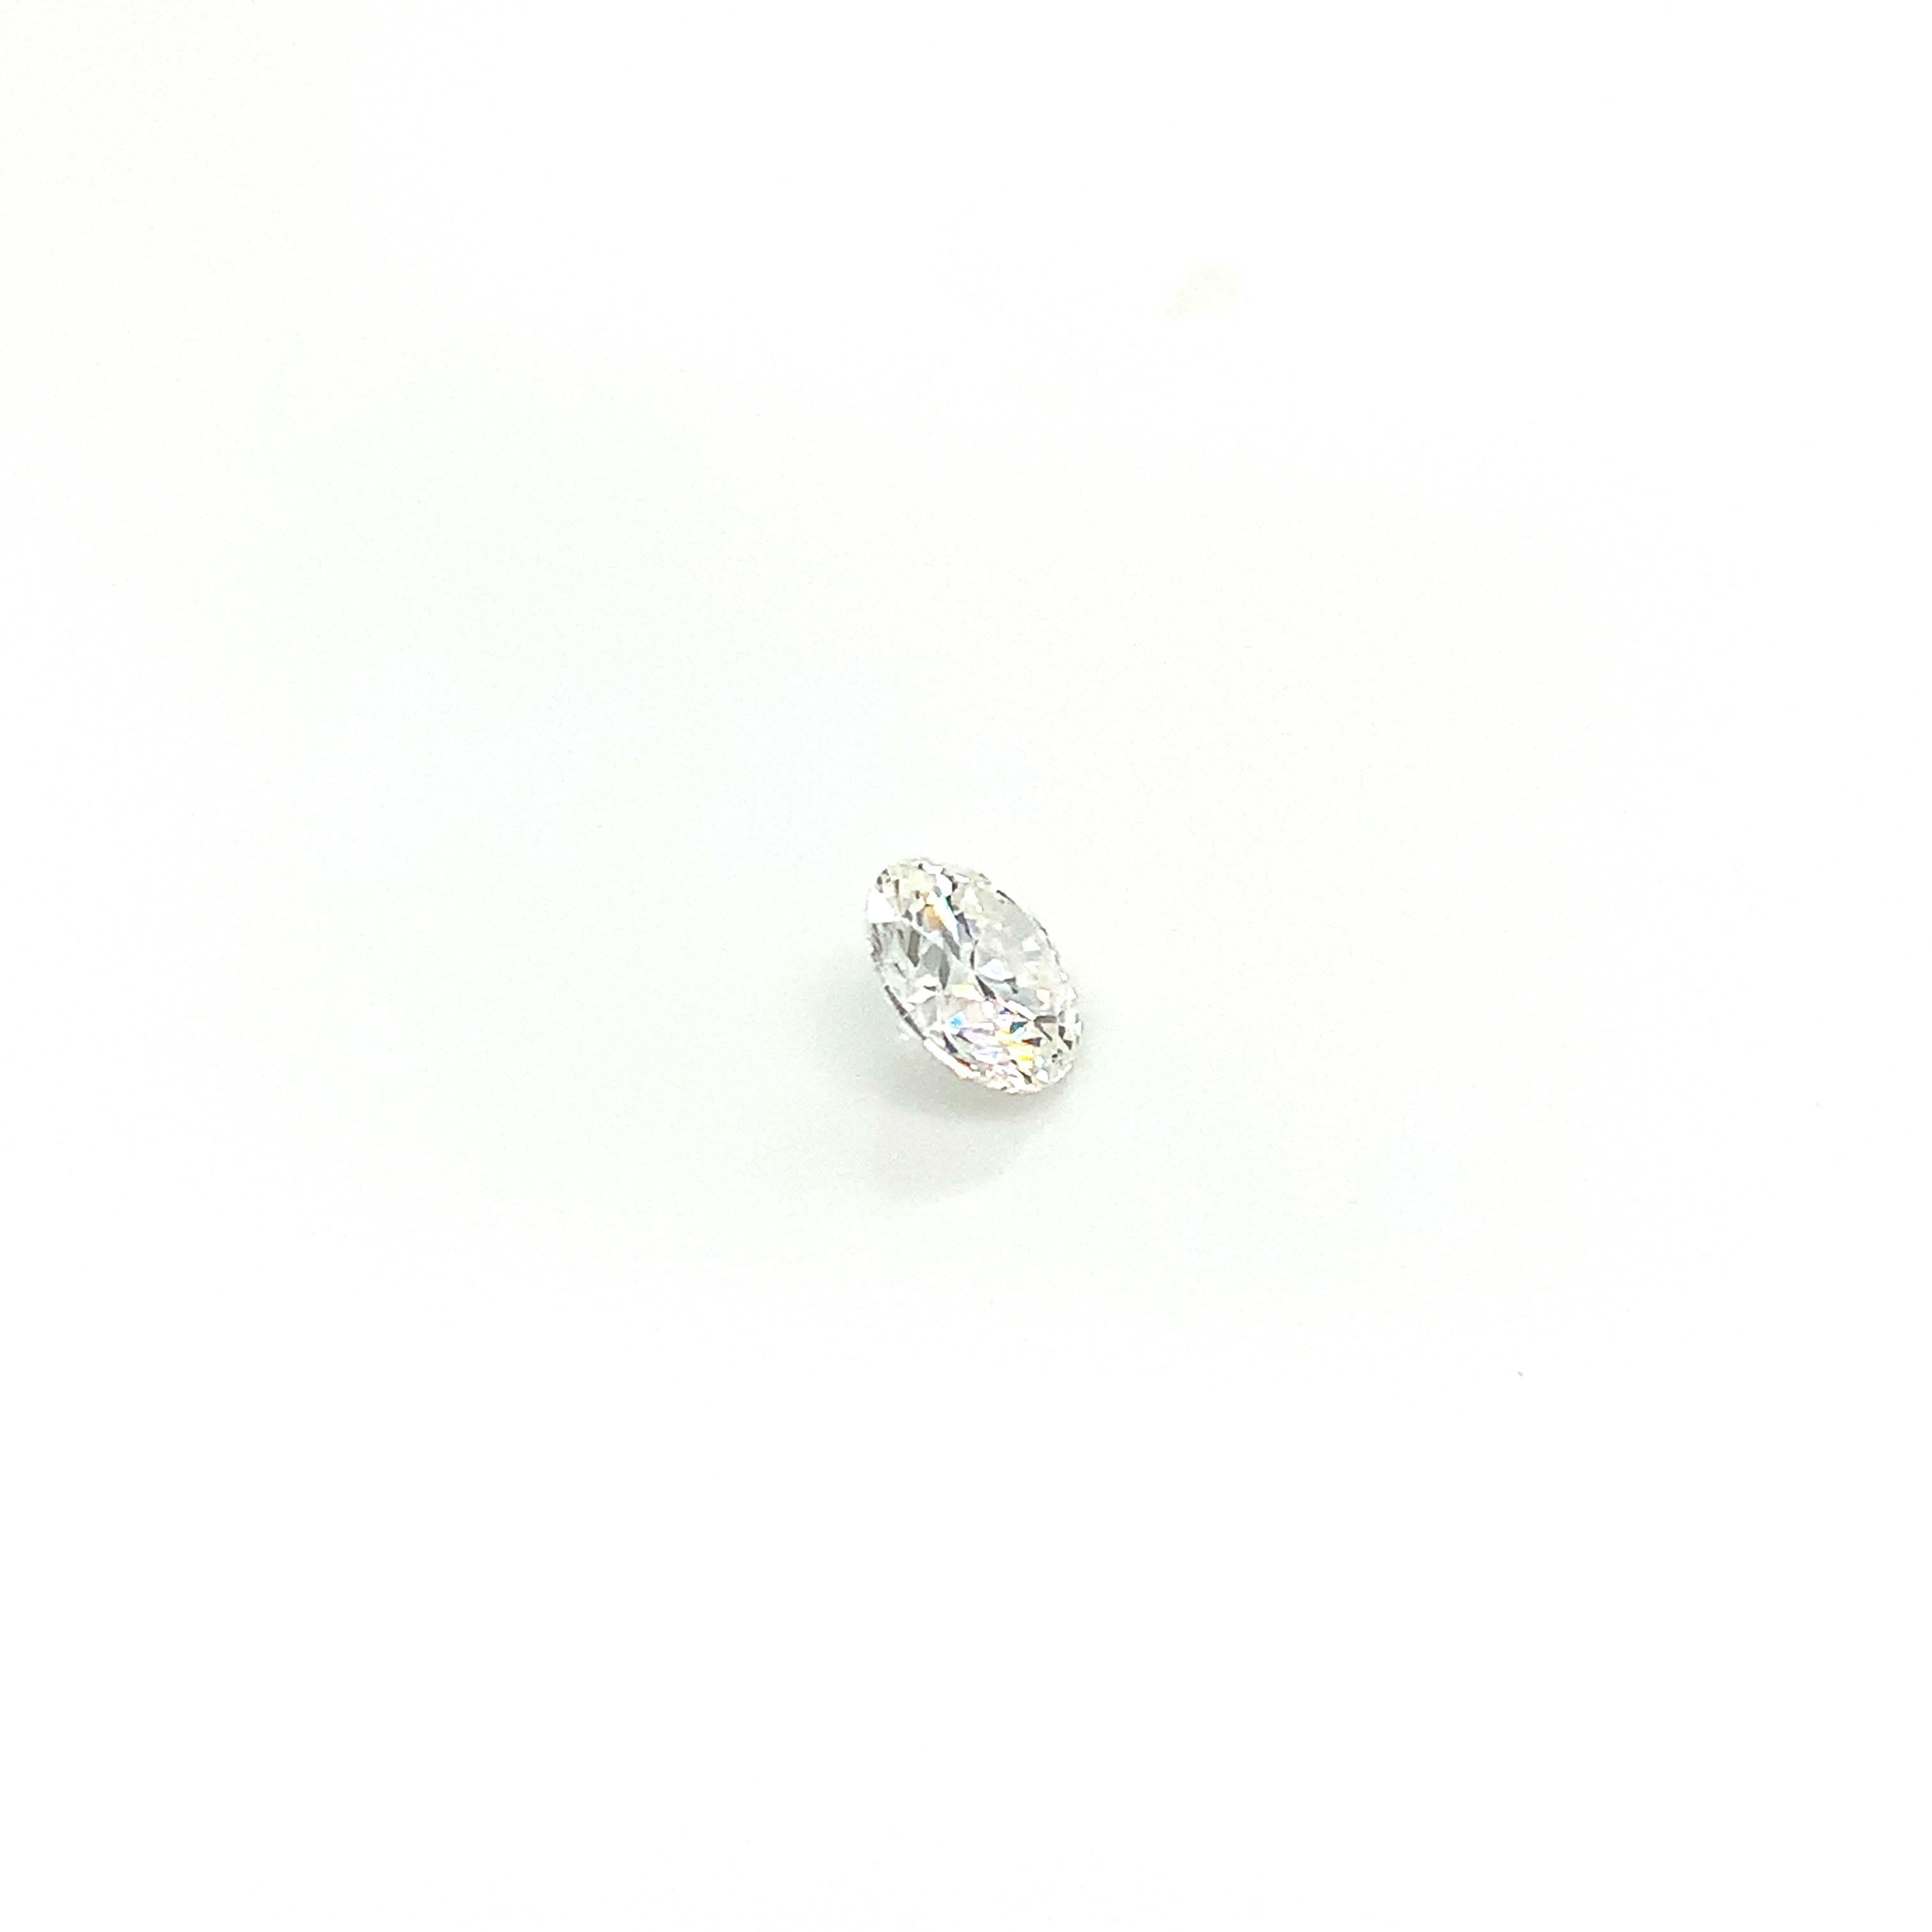 Round Cut GIA Certified 0.70 Carat Round Brilliant Diamond For Sale